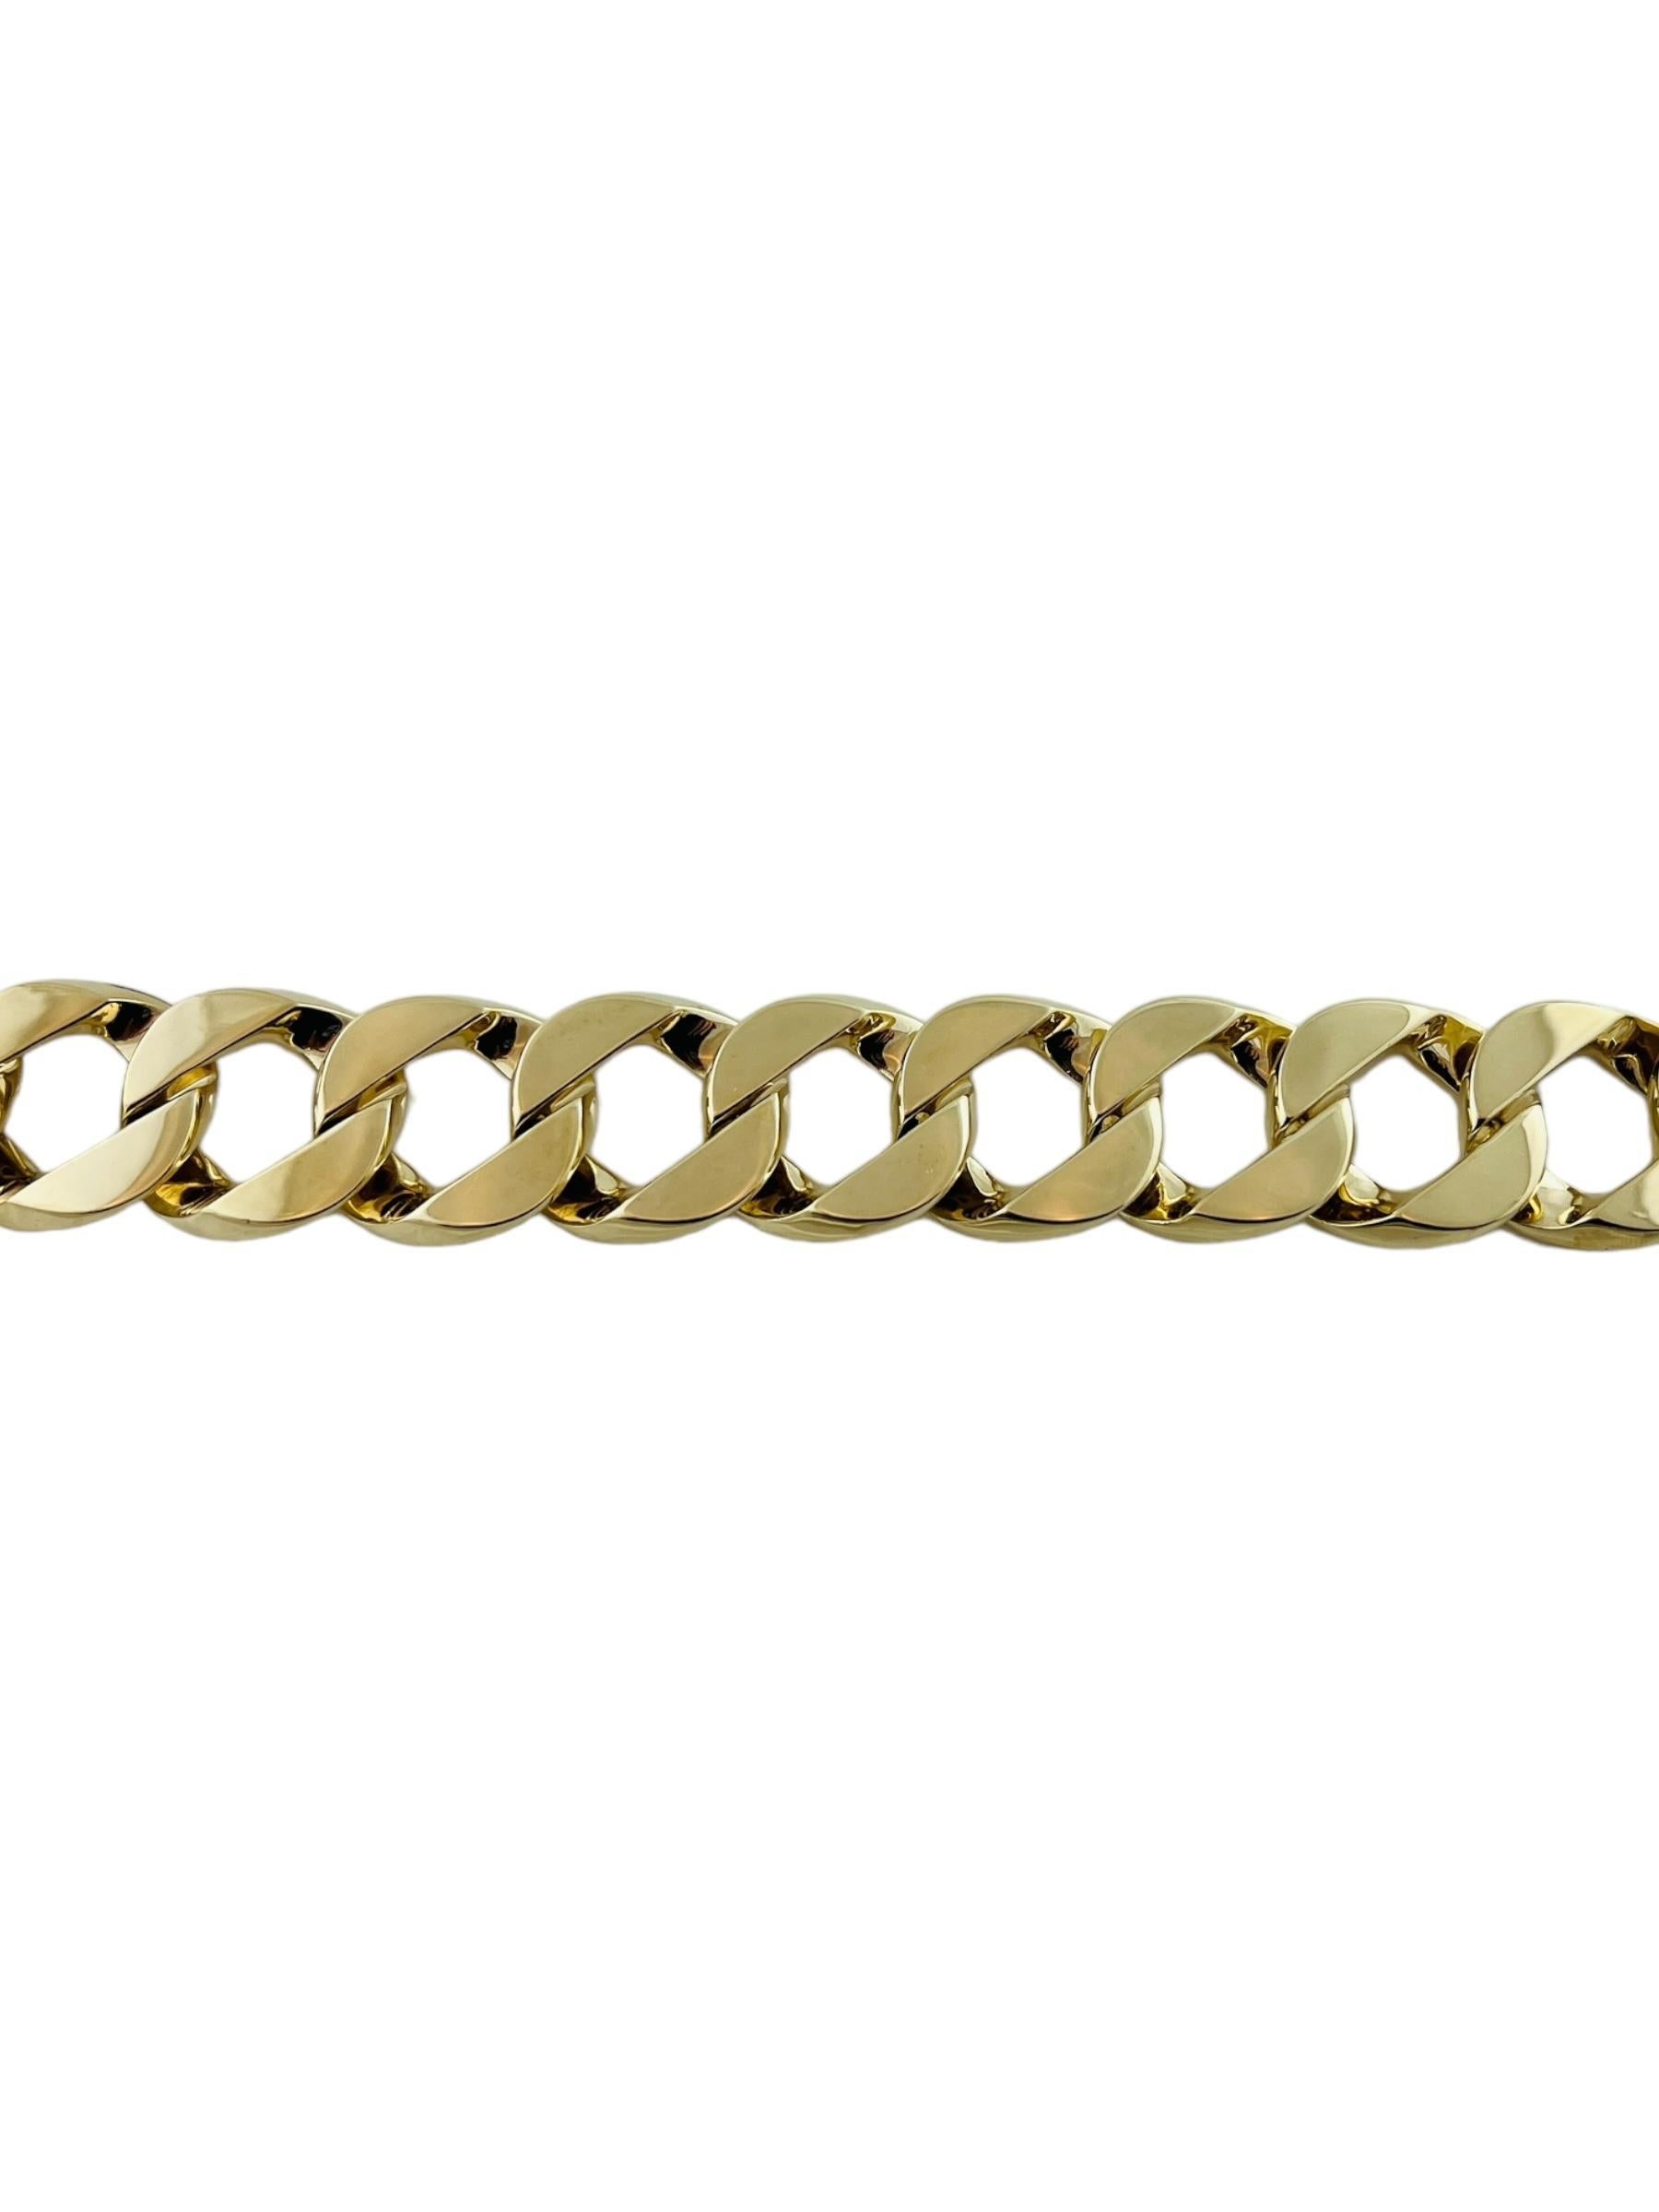 Verdura 14K Yellow Gold Classic Greta Garbo Style Gold Curb Link Bracelet #16770 For Sale 3